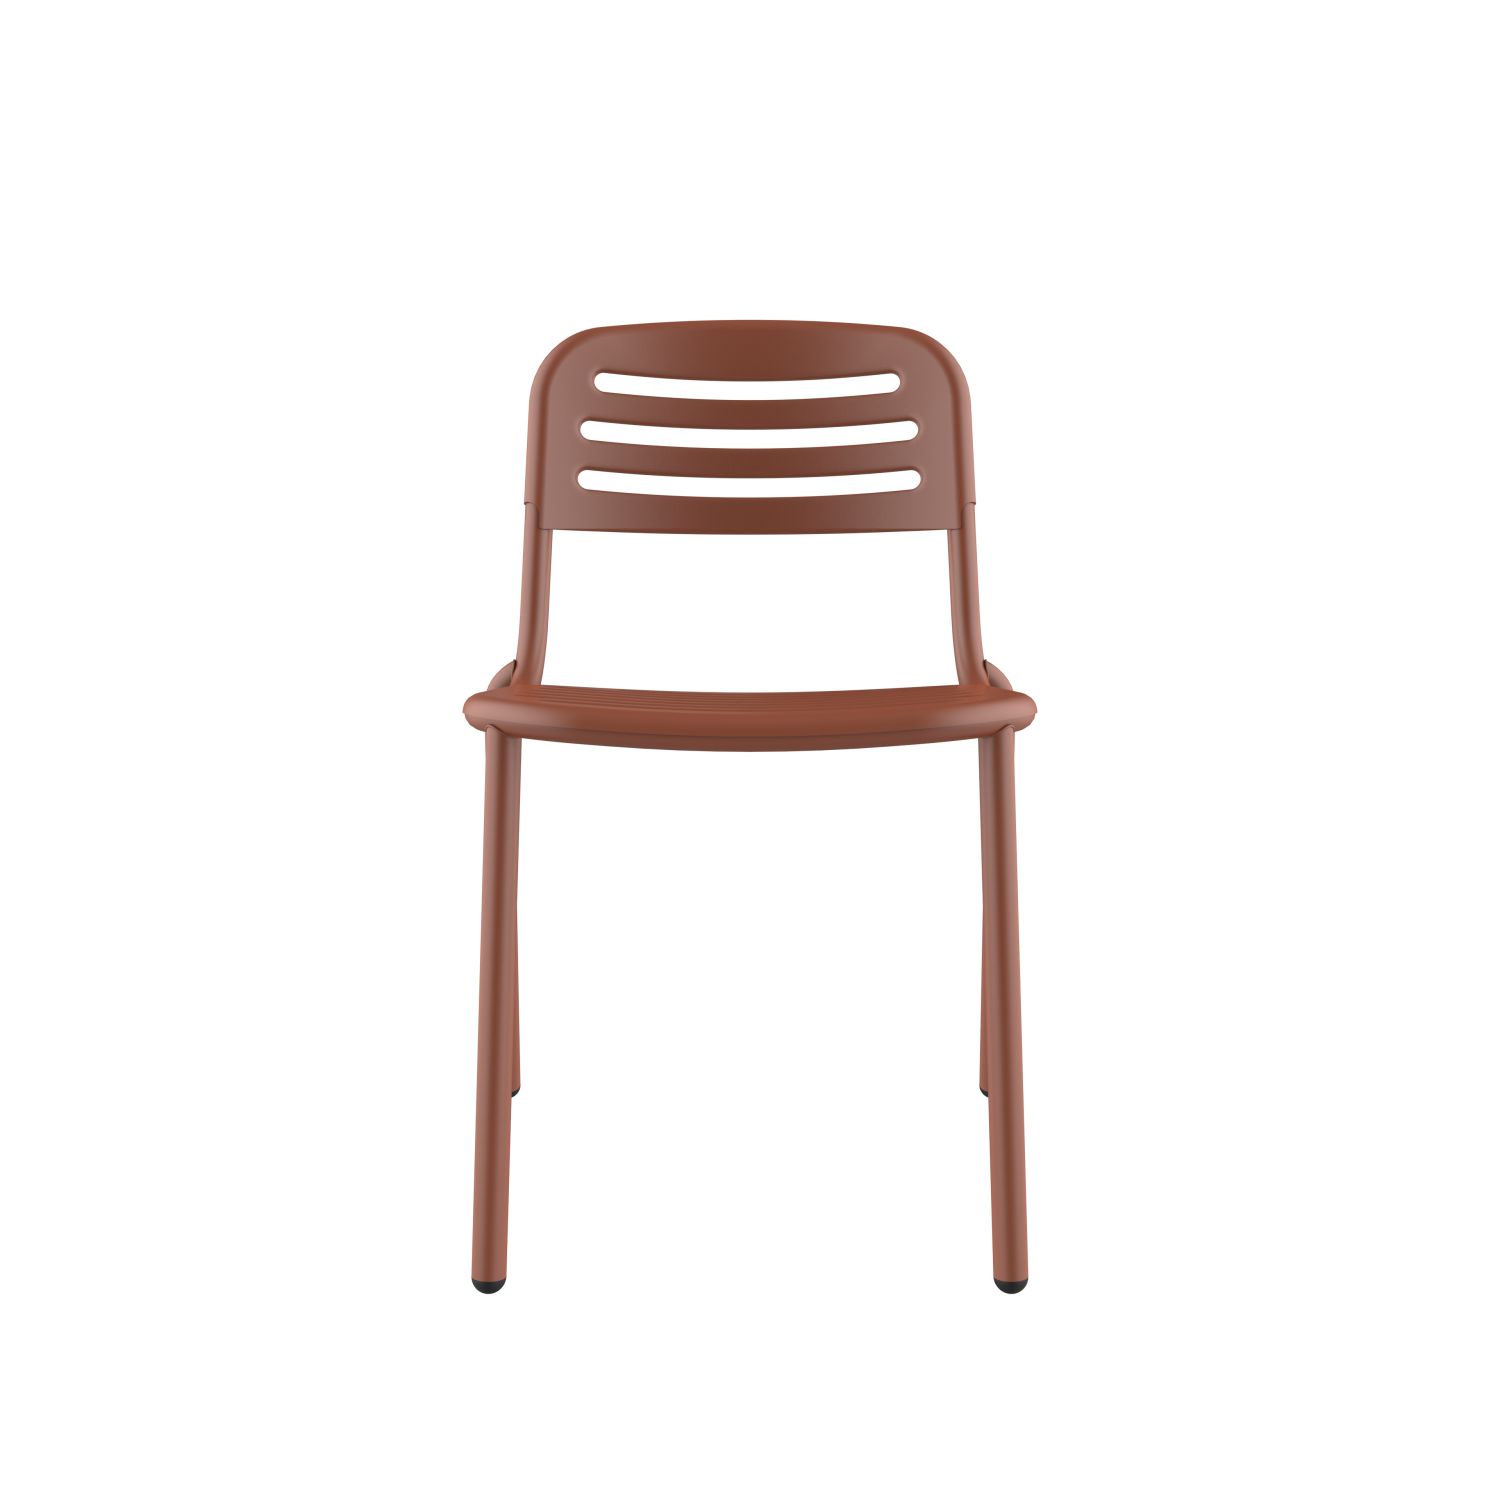 lensvelt studio stefan scholten loop chair stackable no armrests with perforation copper brown ral8004